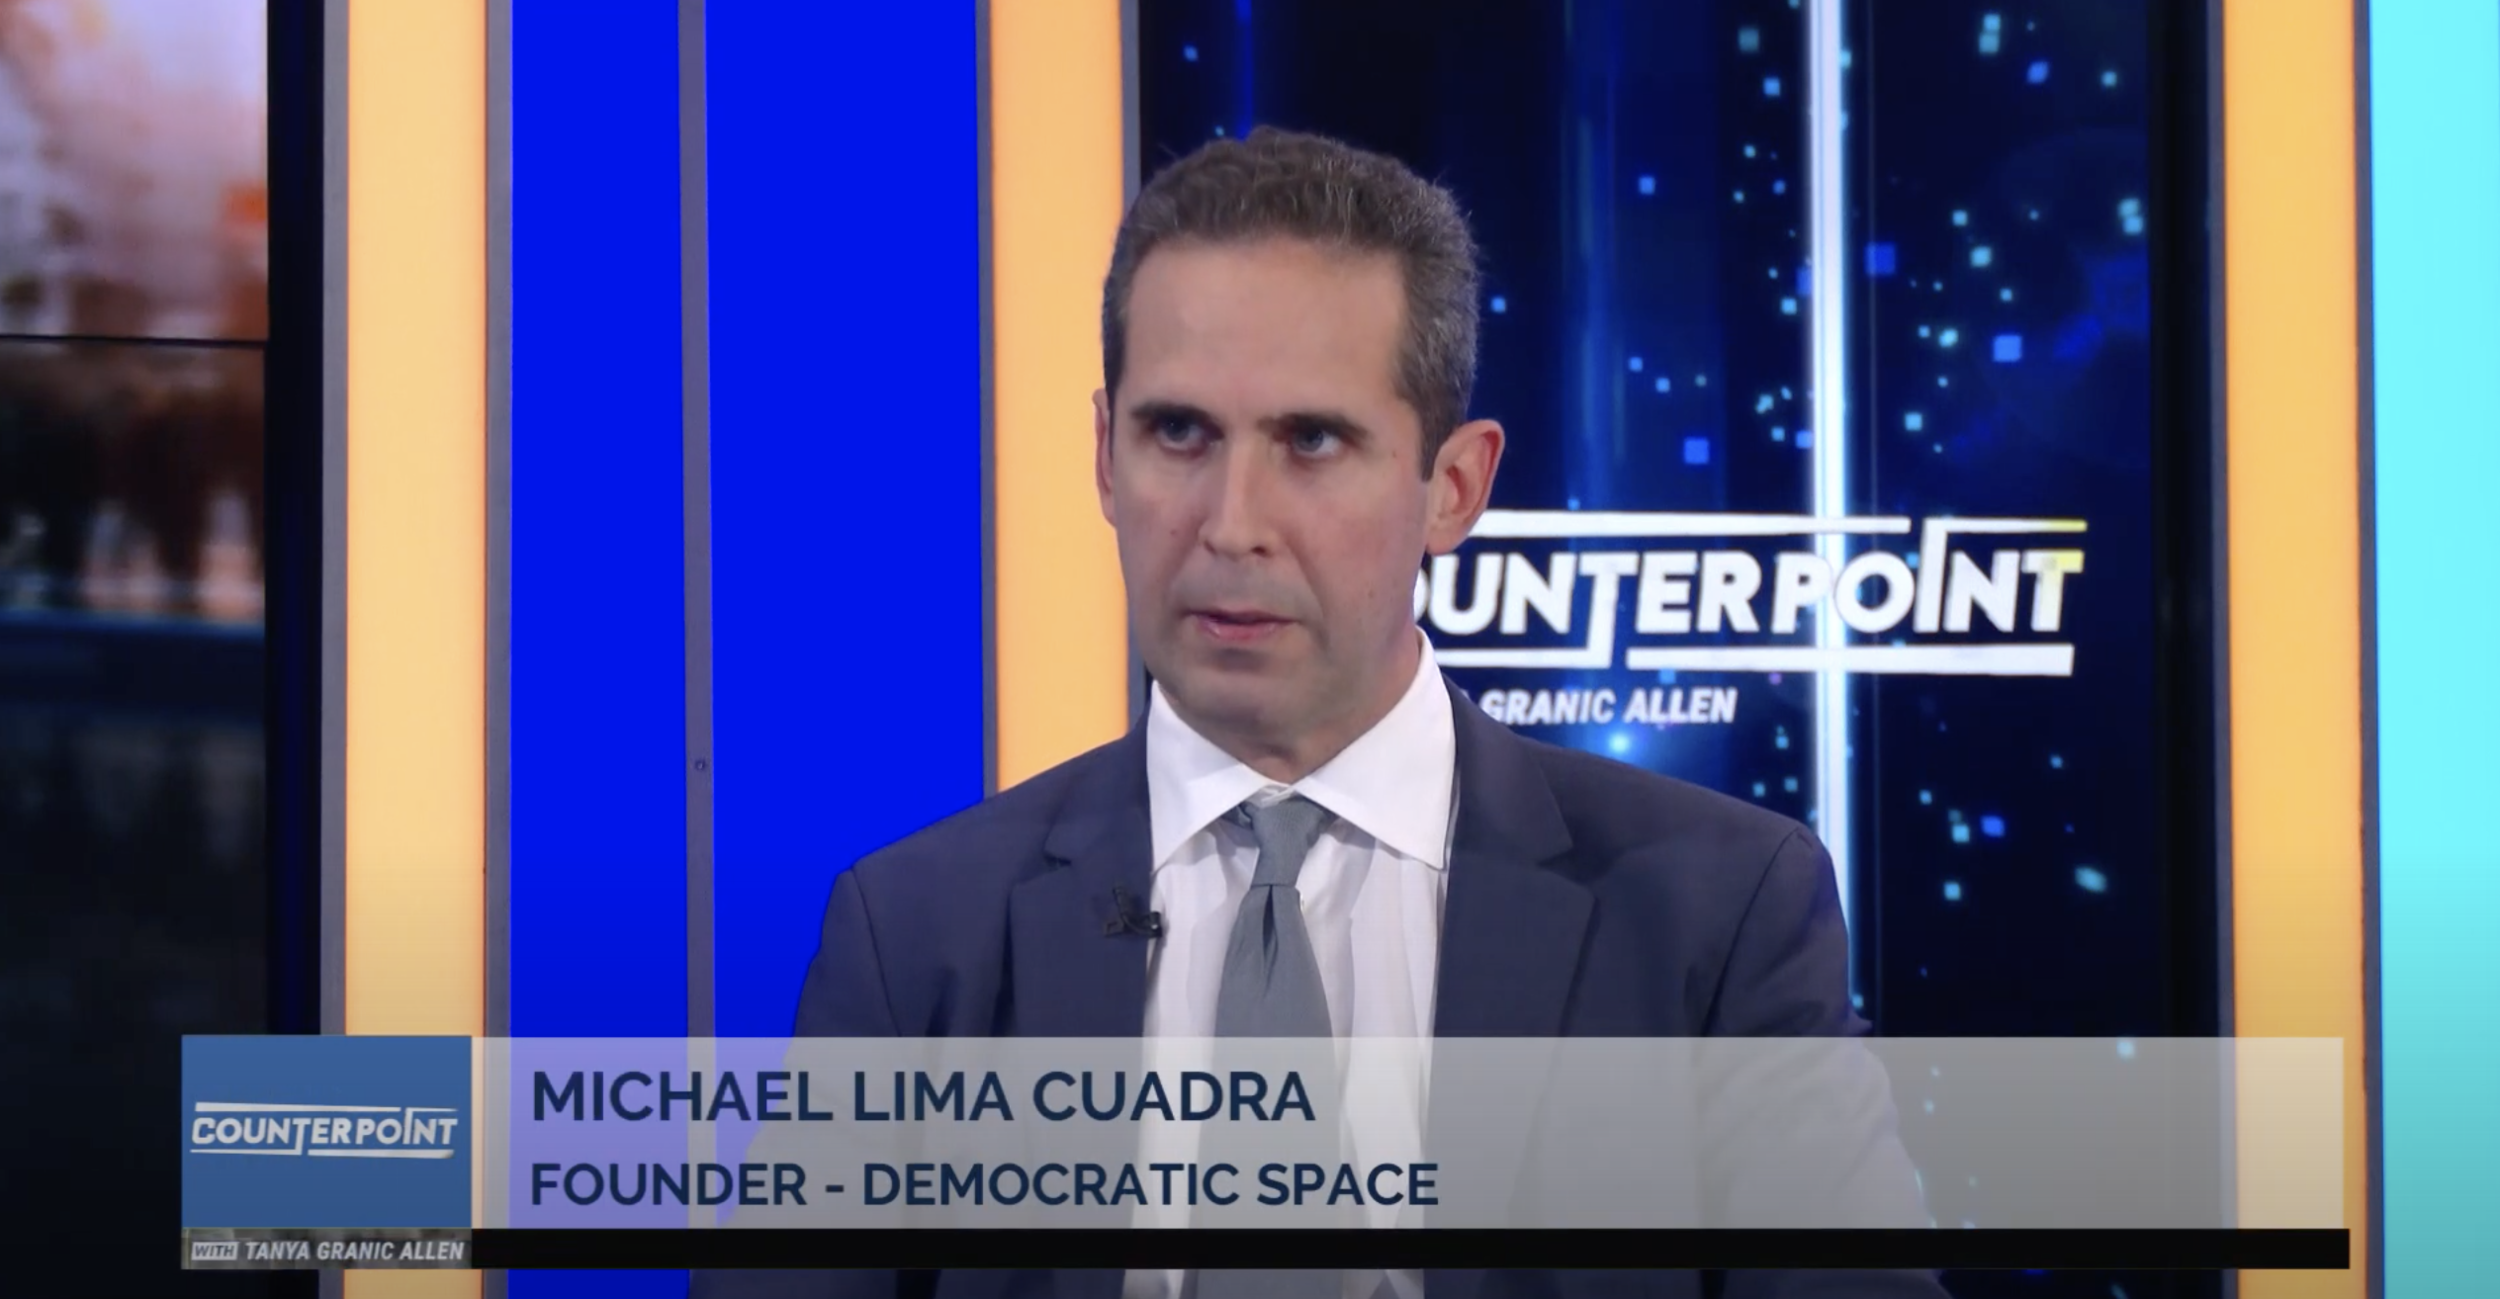 Democratic Spaces Michael Lima Cuadra on the News — Democratic Spaces